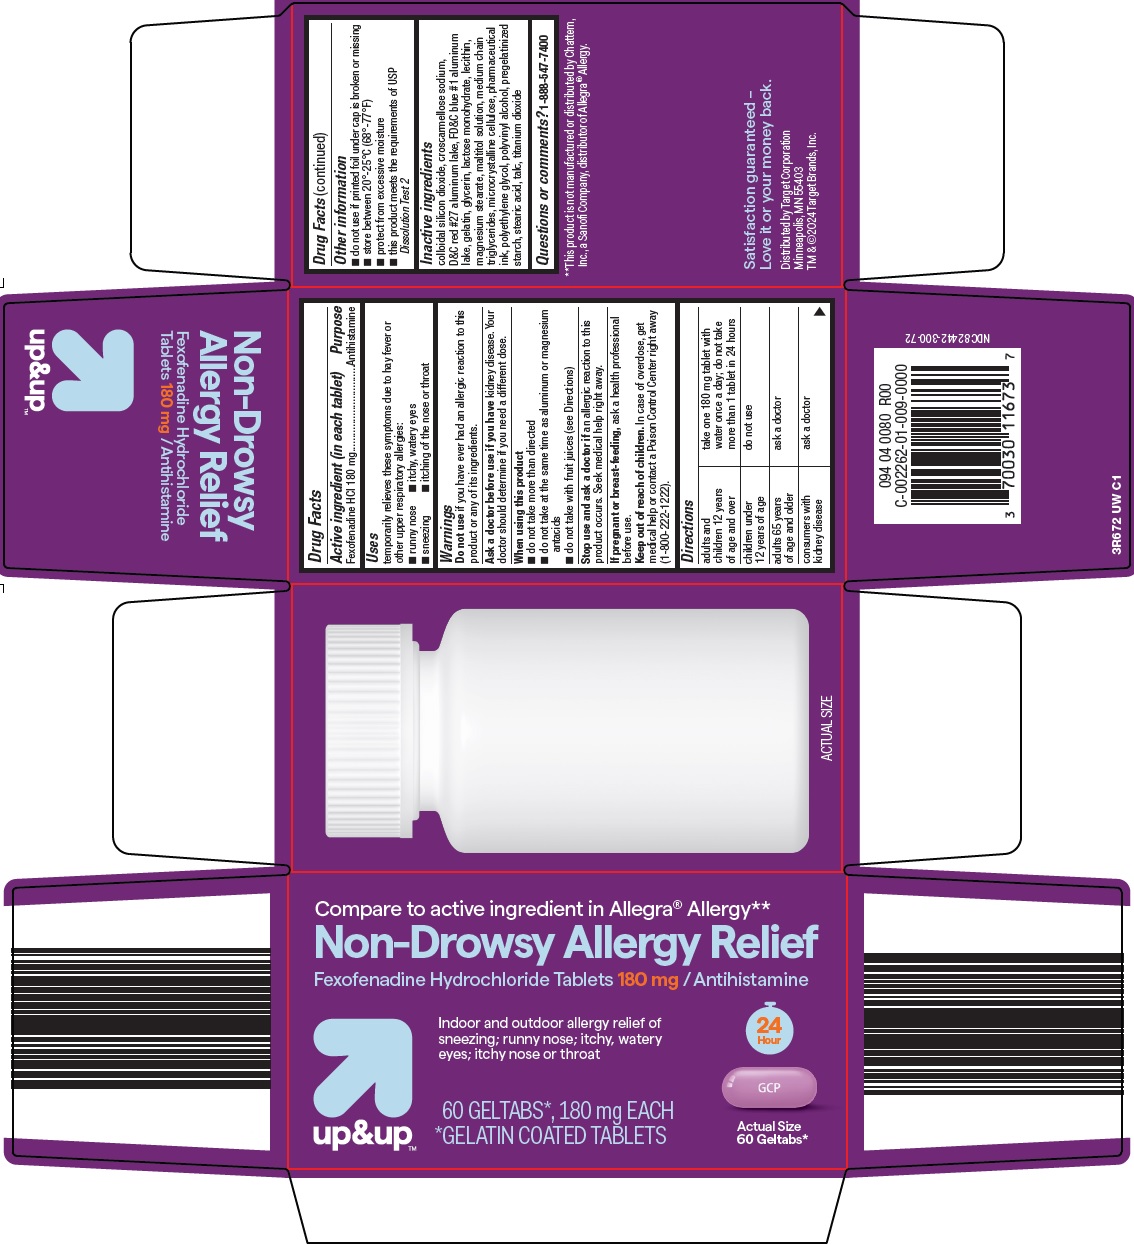 3r6-uw-non-drowsy-allergy-relief